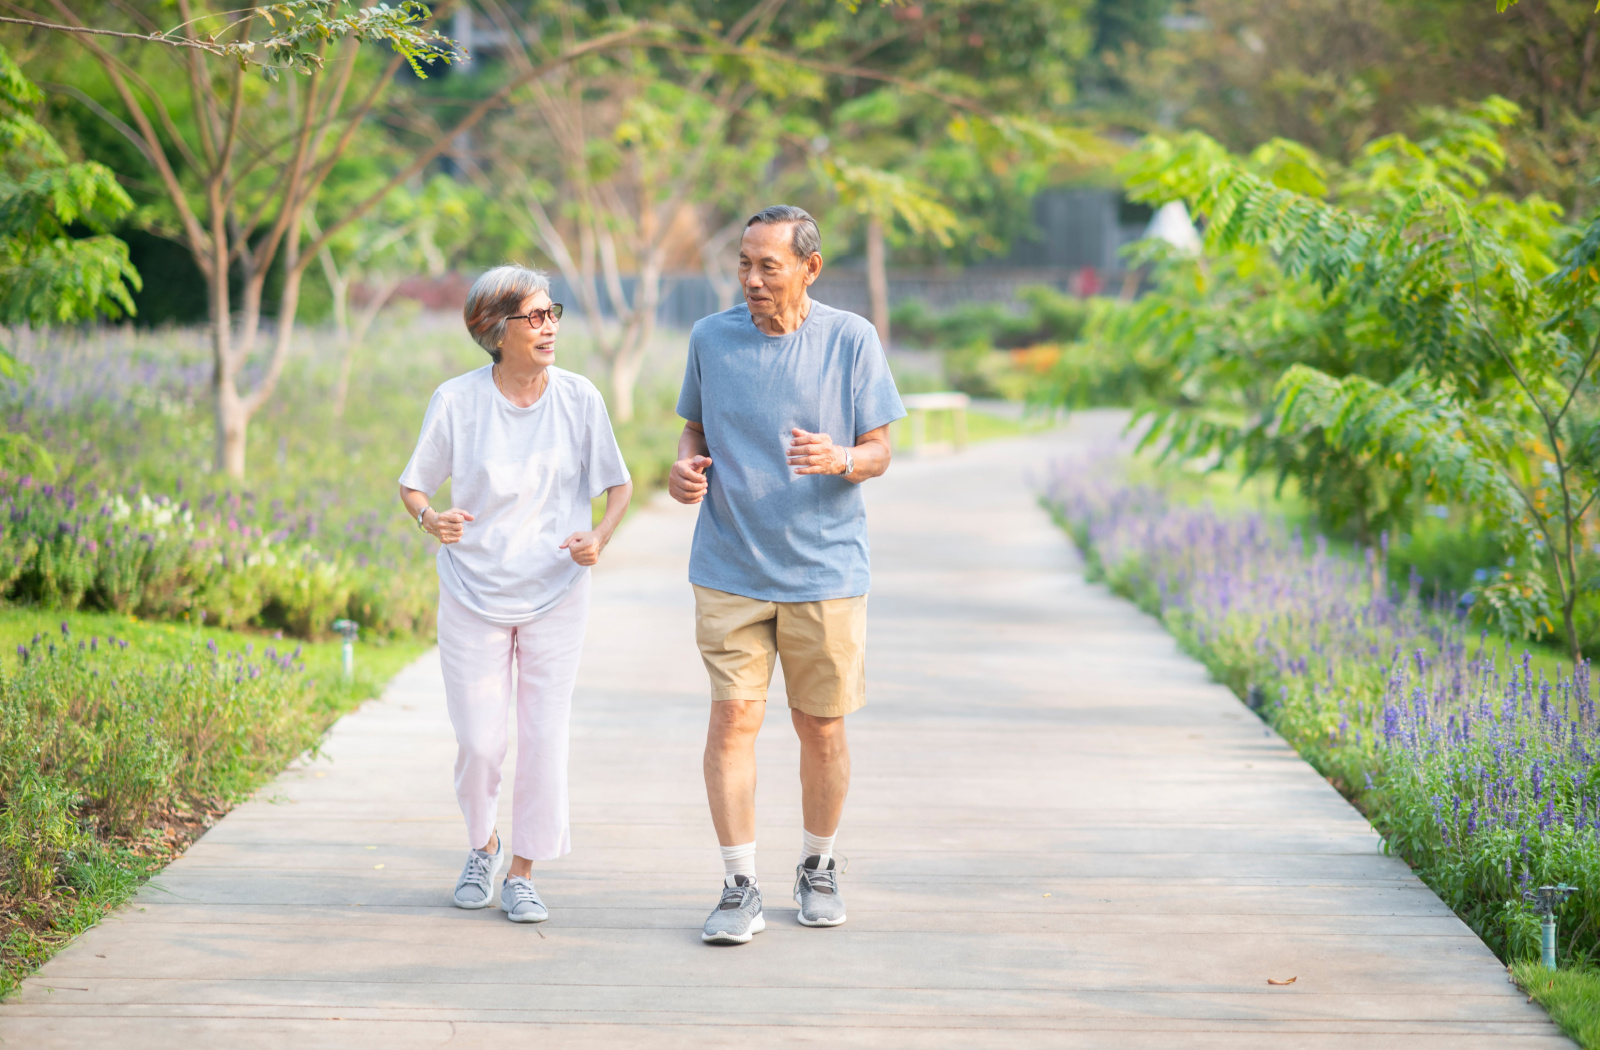 A senior woman and a senior man smiling while walking outdoors.